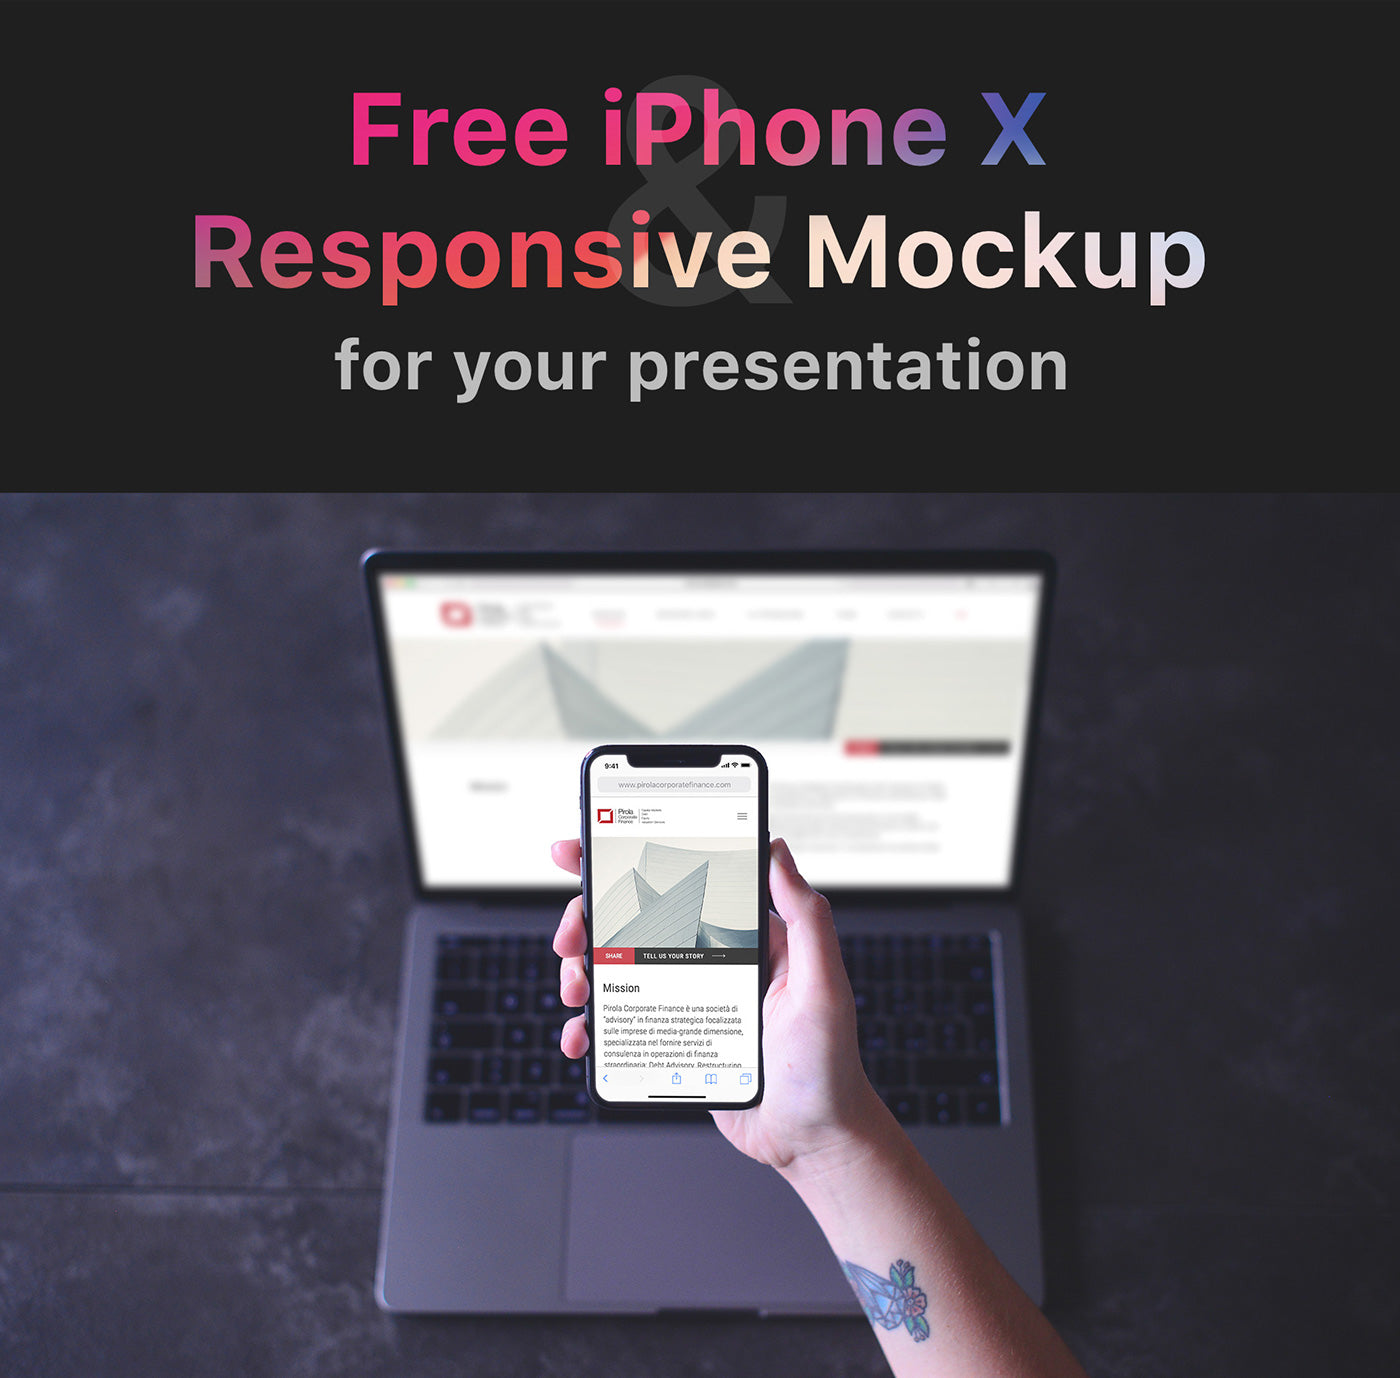 Free iPhone X - Responsive Mockup